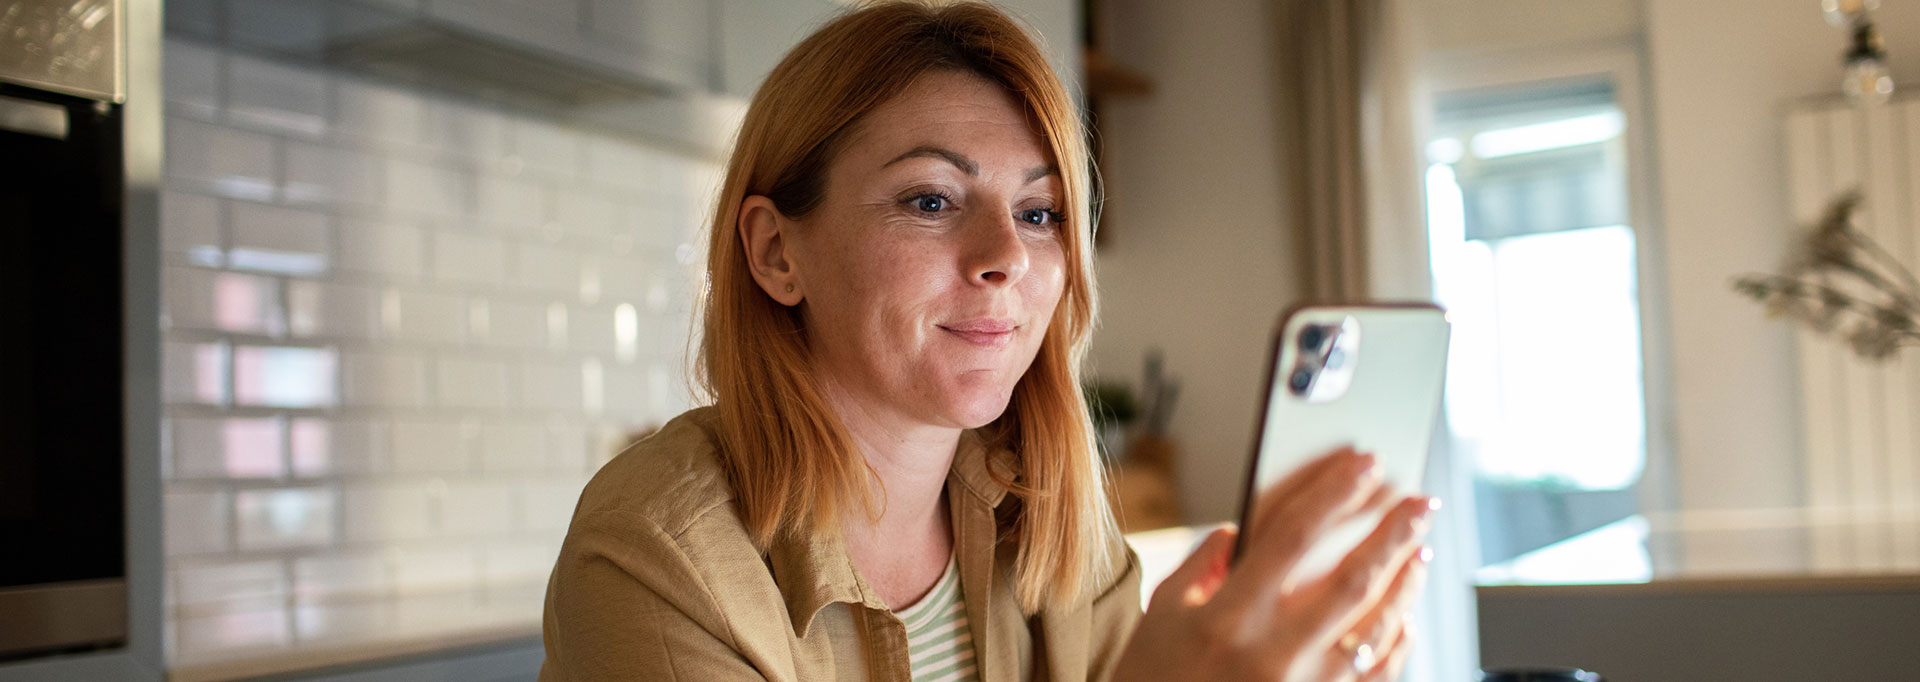 woman using phone at home